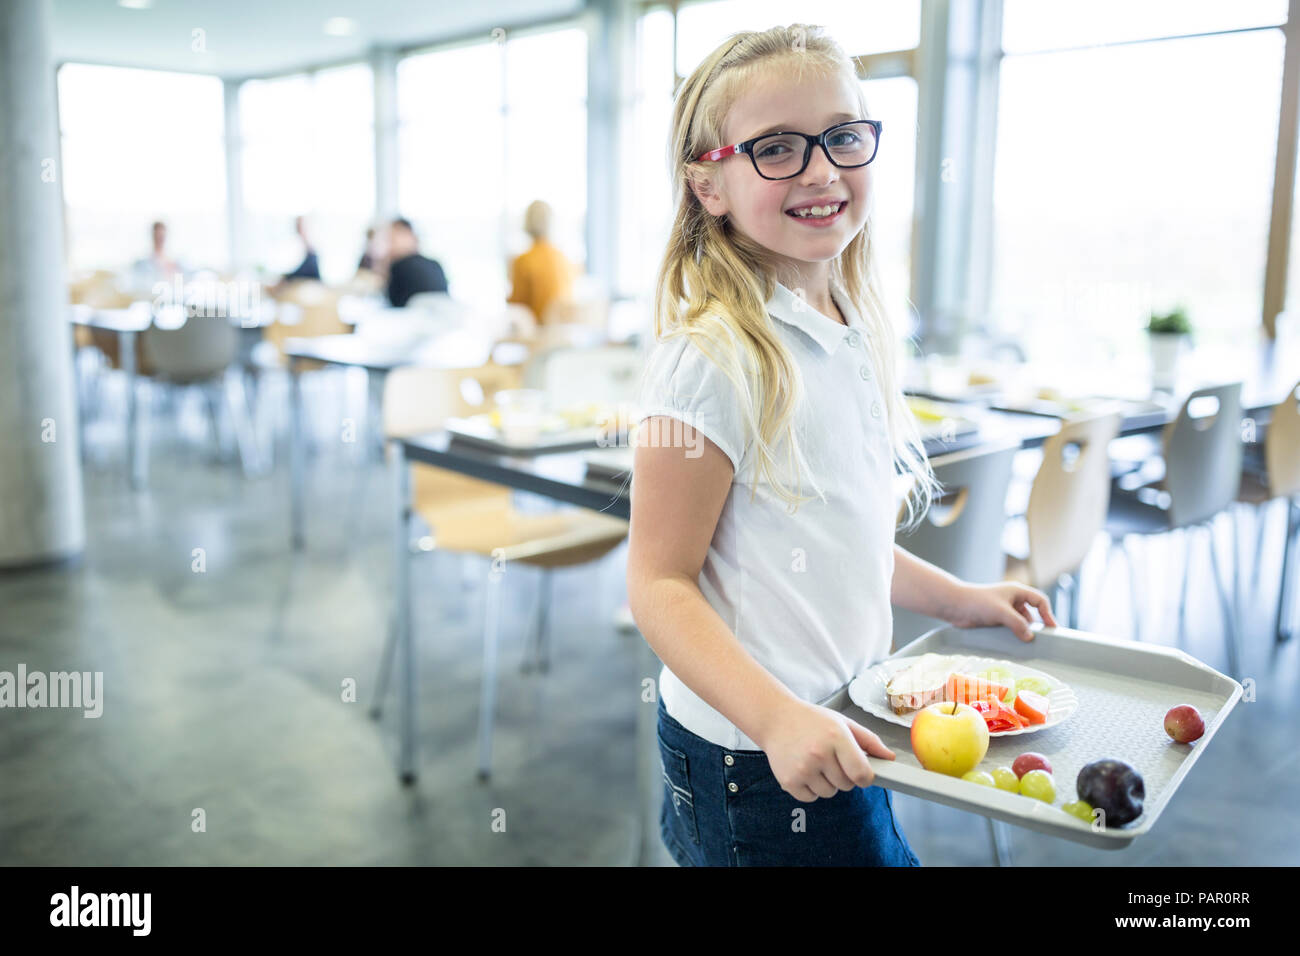 Portrait of smiling schoolgirl carrying tray in school canteen Stock Photo